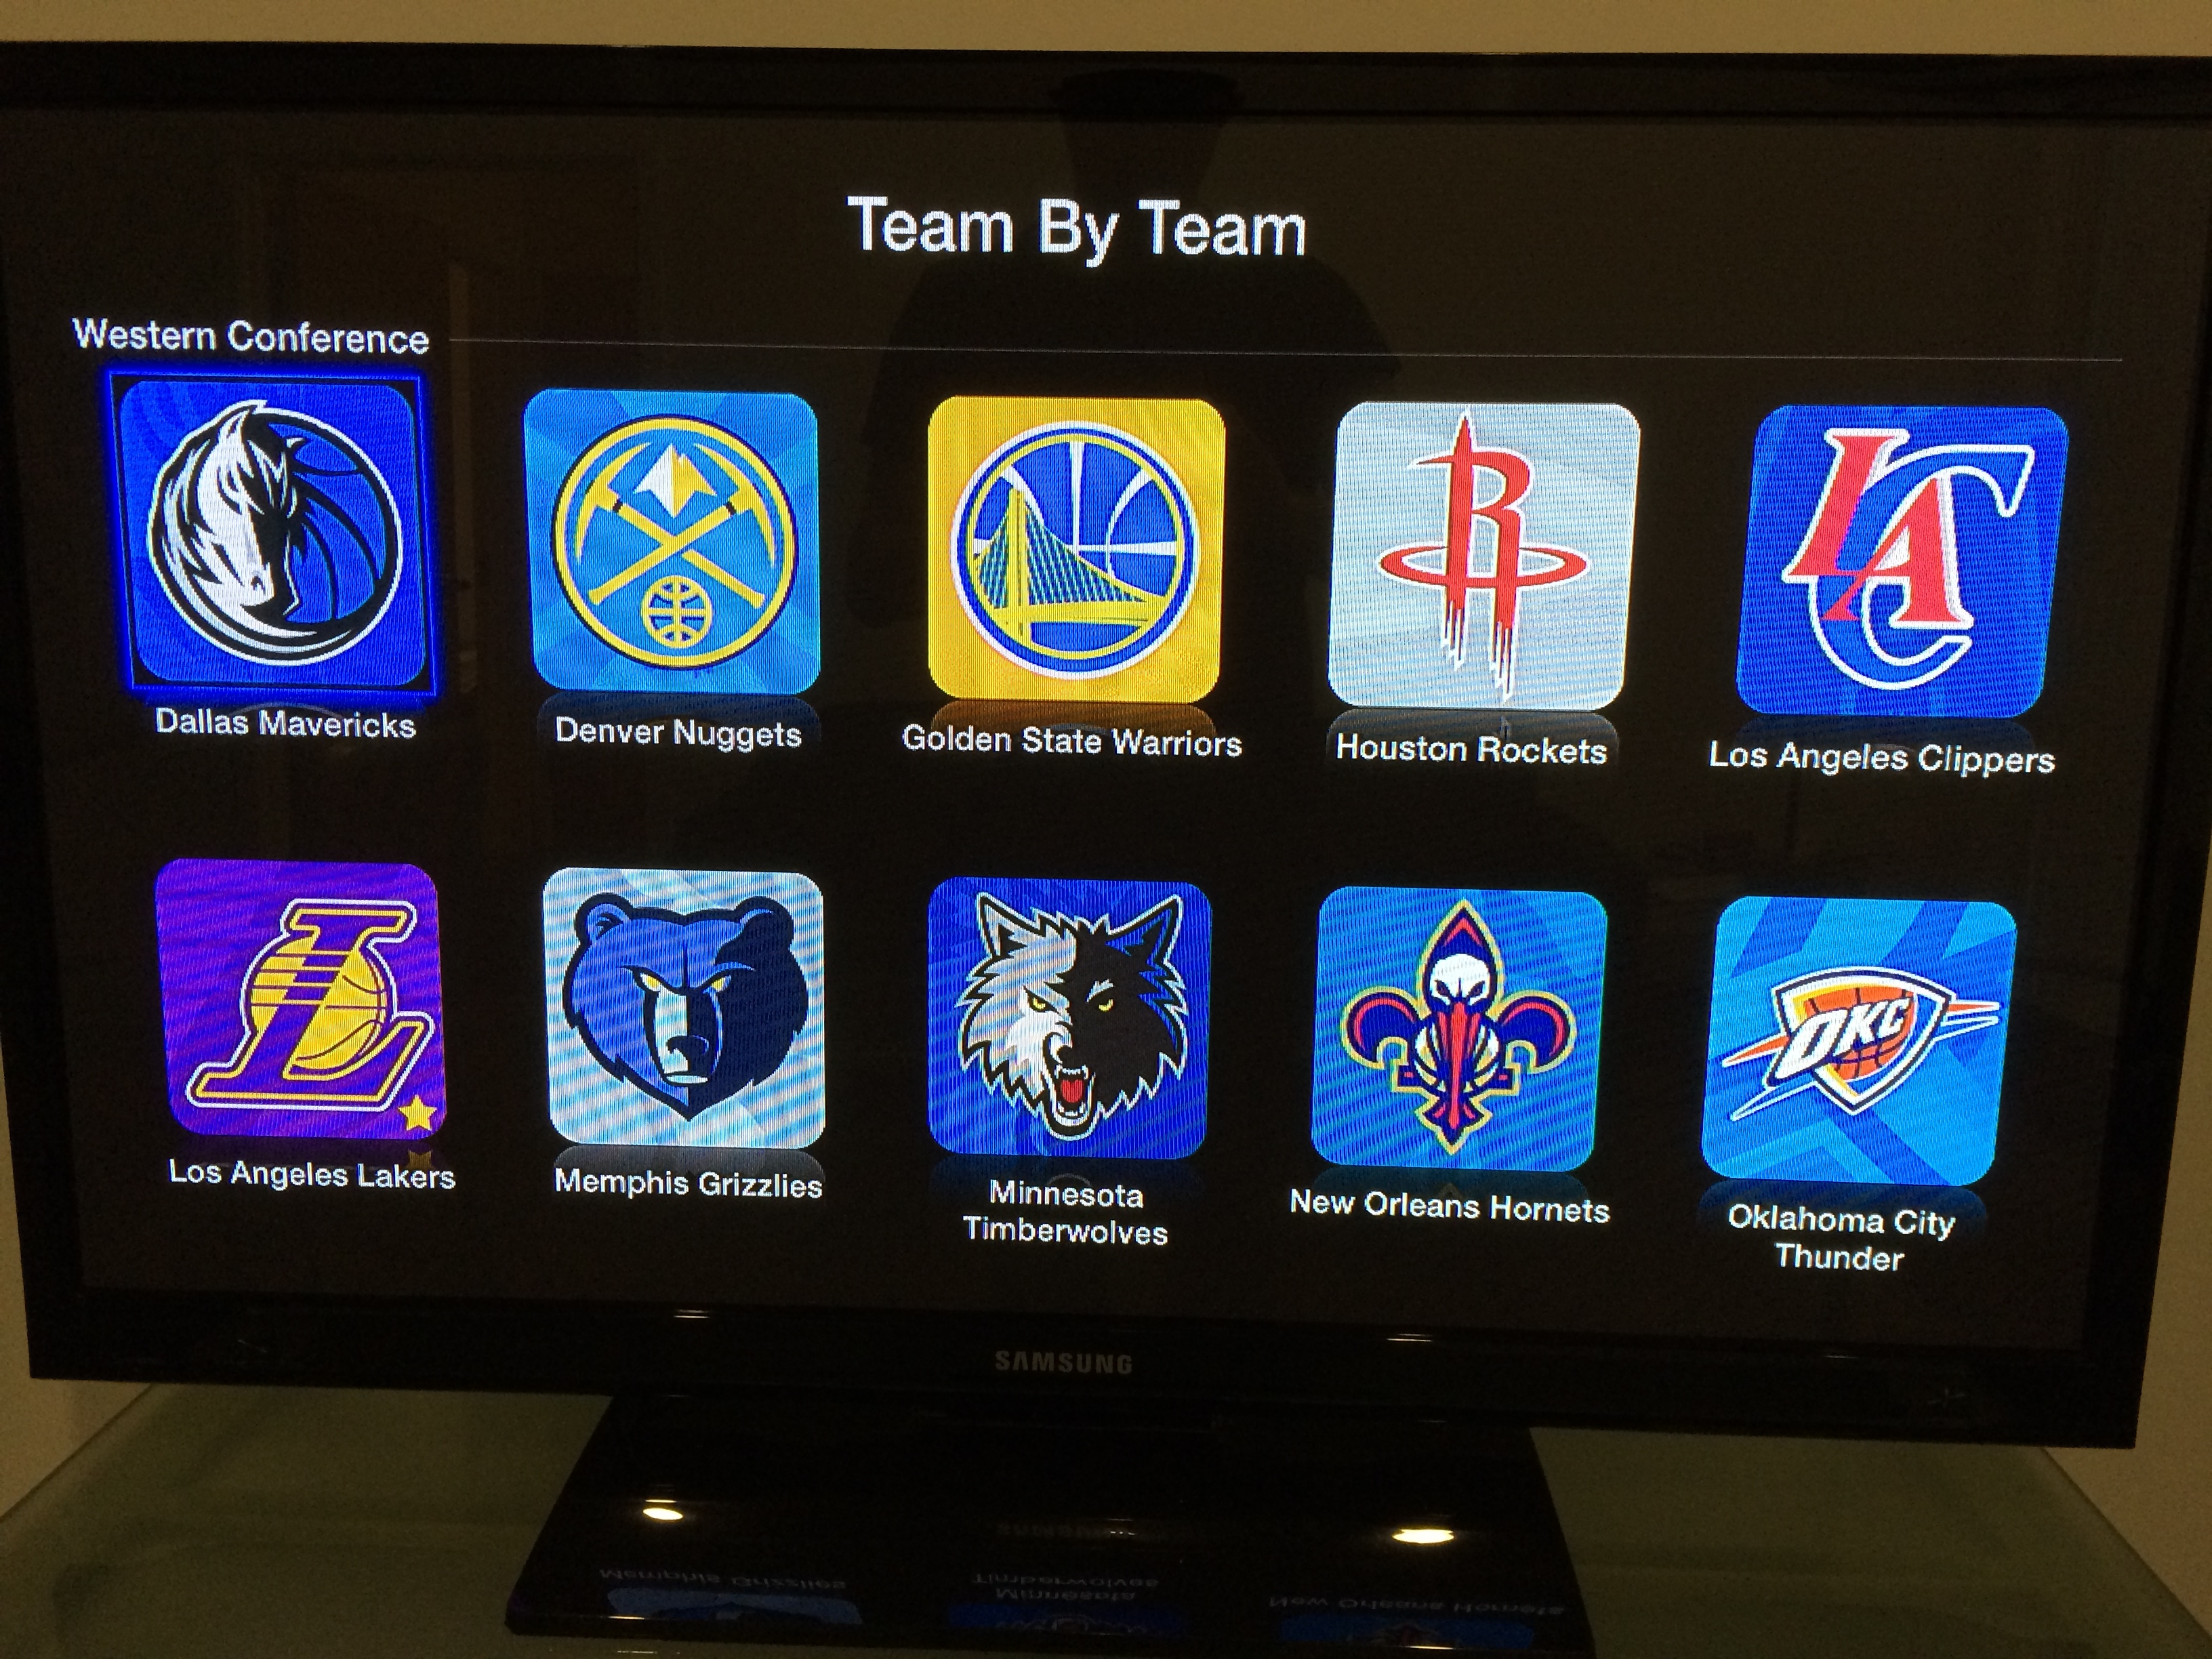 Apple TV NBA League Pass app updated for new season